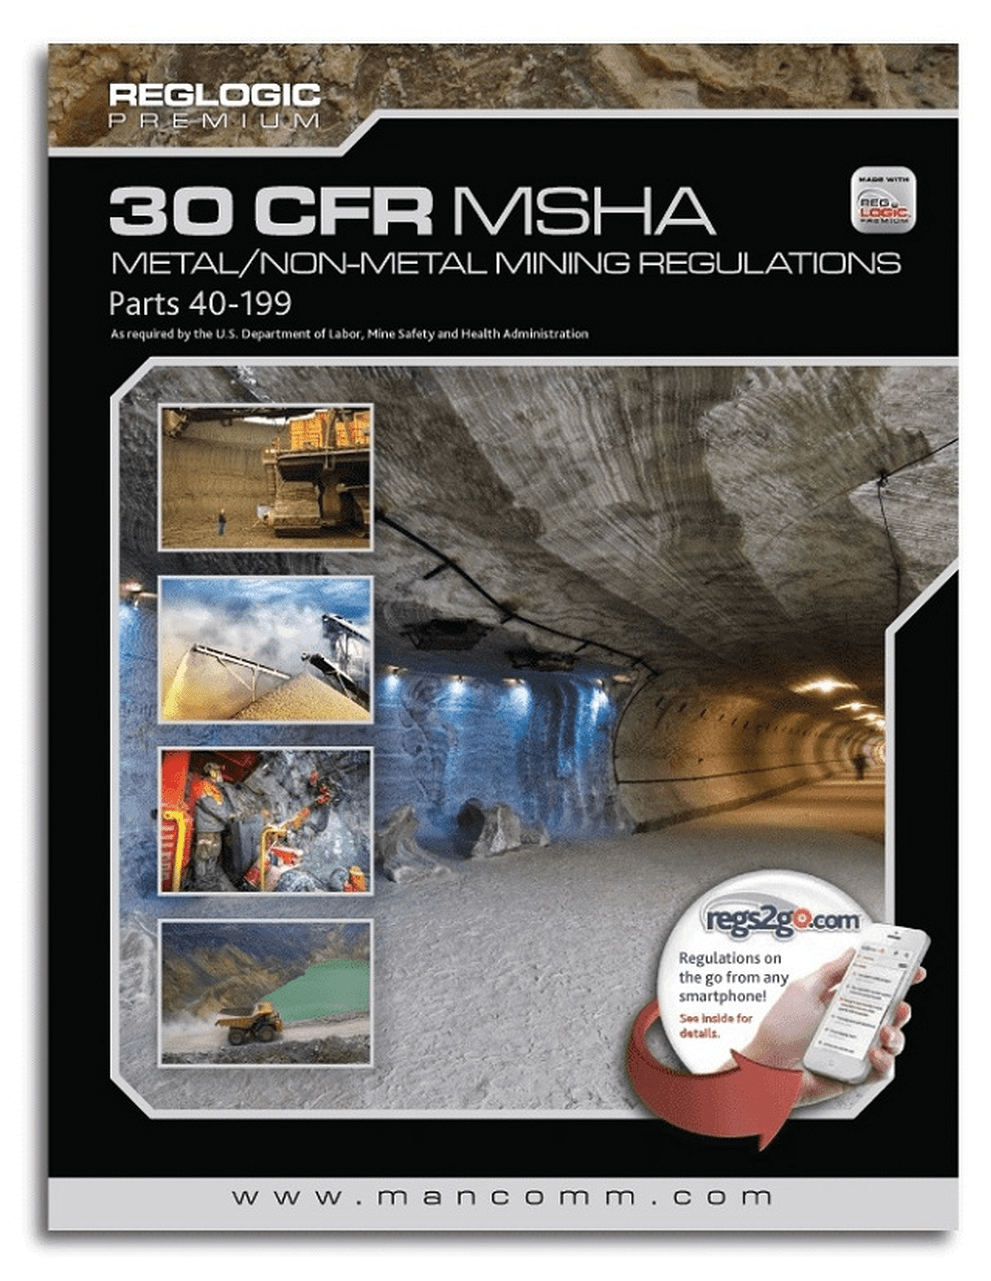 Mancomm 30 CFR: Parts 40-199: MSHA Metal/Non-Metal Mining Regulations, July 2018